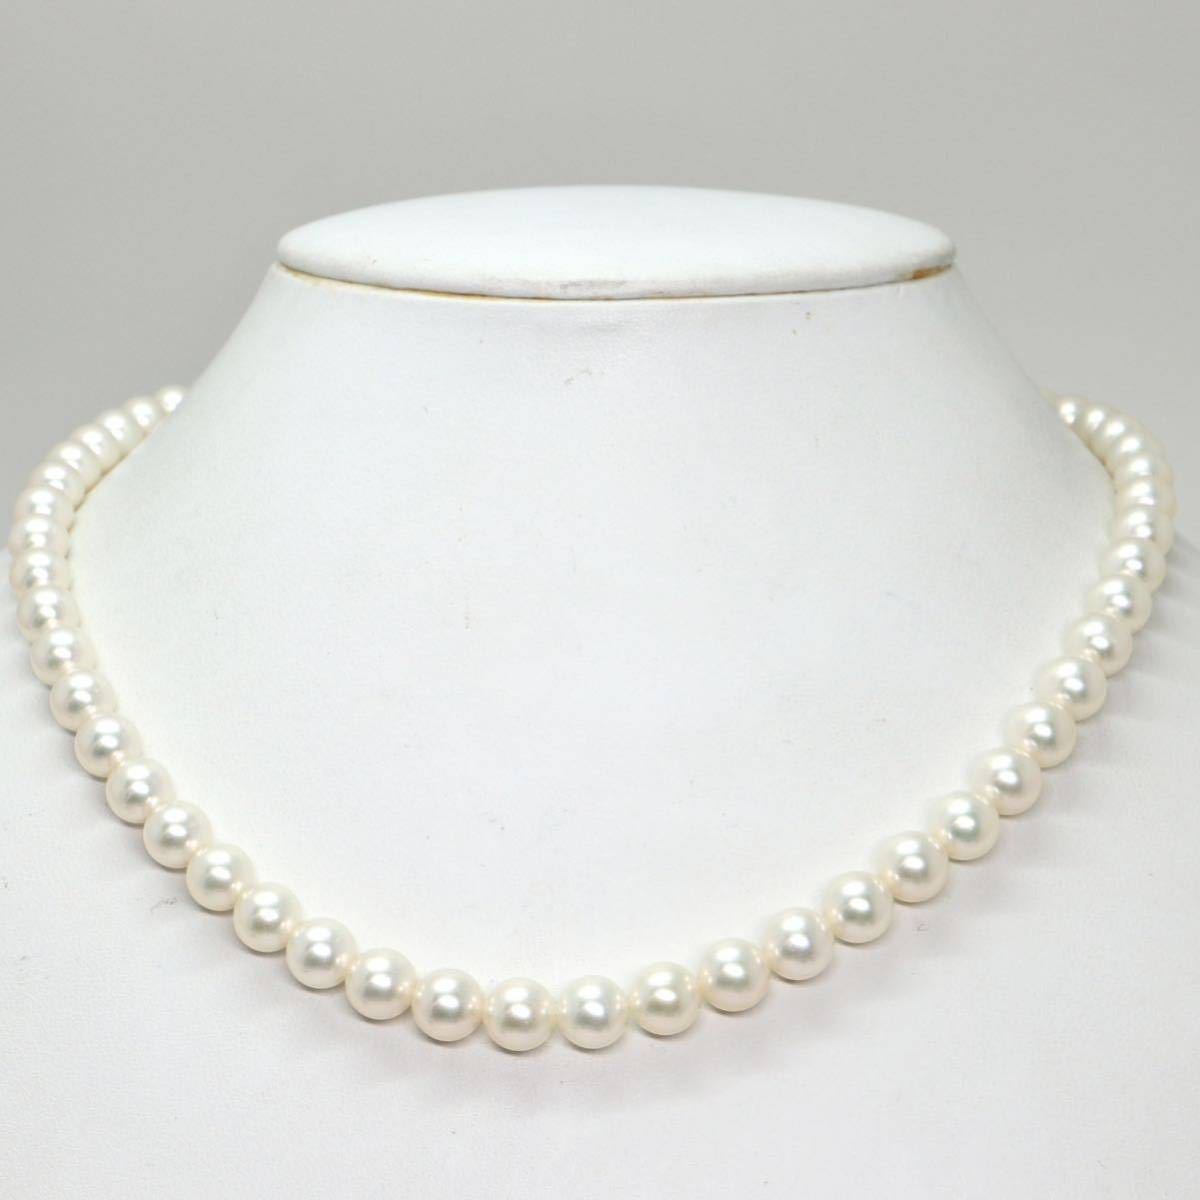 MIKIMOTO(ミキモト)良質!!《アコヤ本真珠ネックレス》D ◎7.0-7.5mm珠 32.7g 43cm pearl necklace jewelry ジュエリー ED5/EE5_画像2